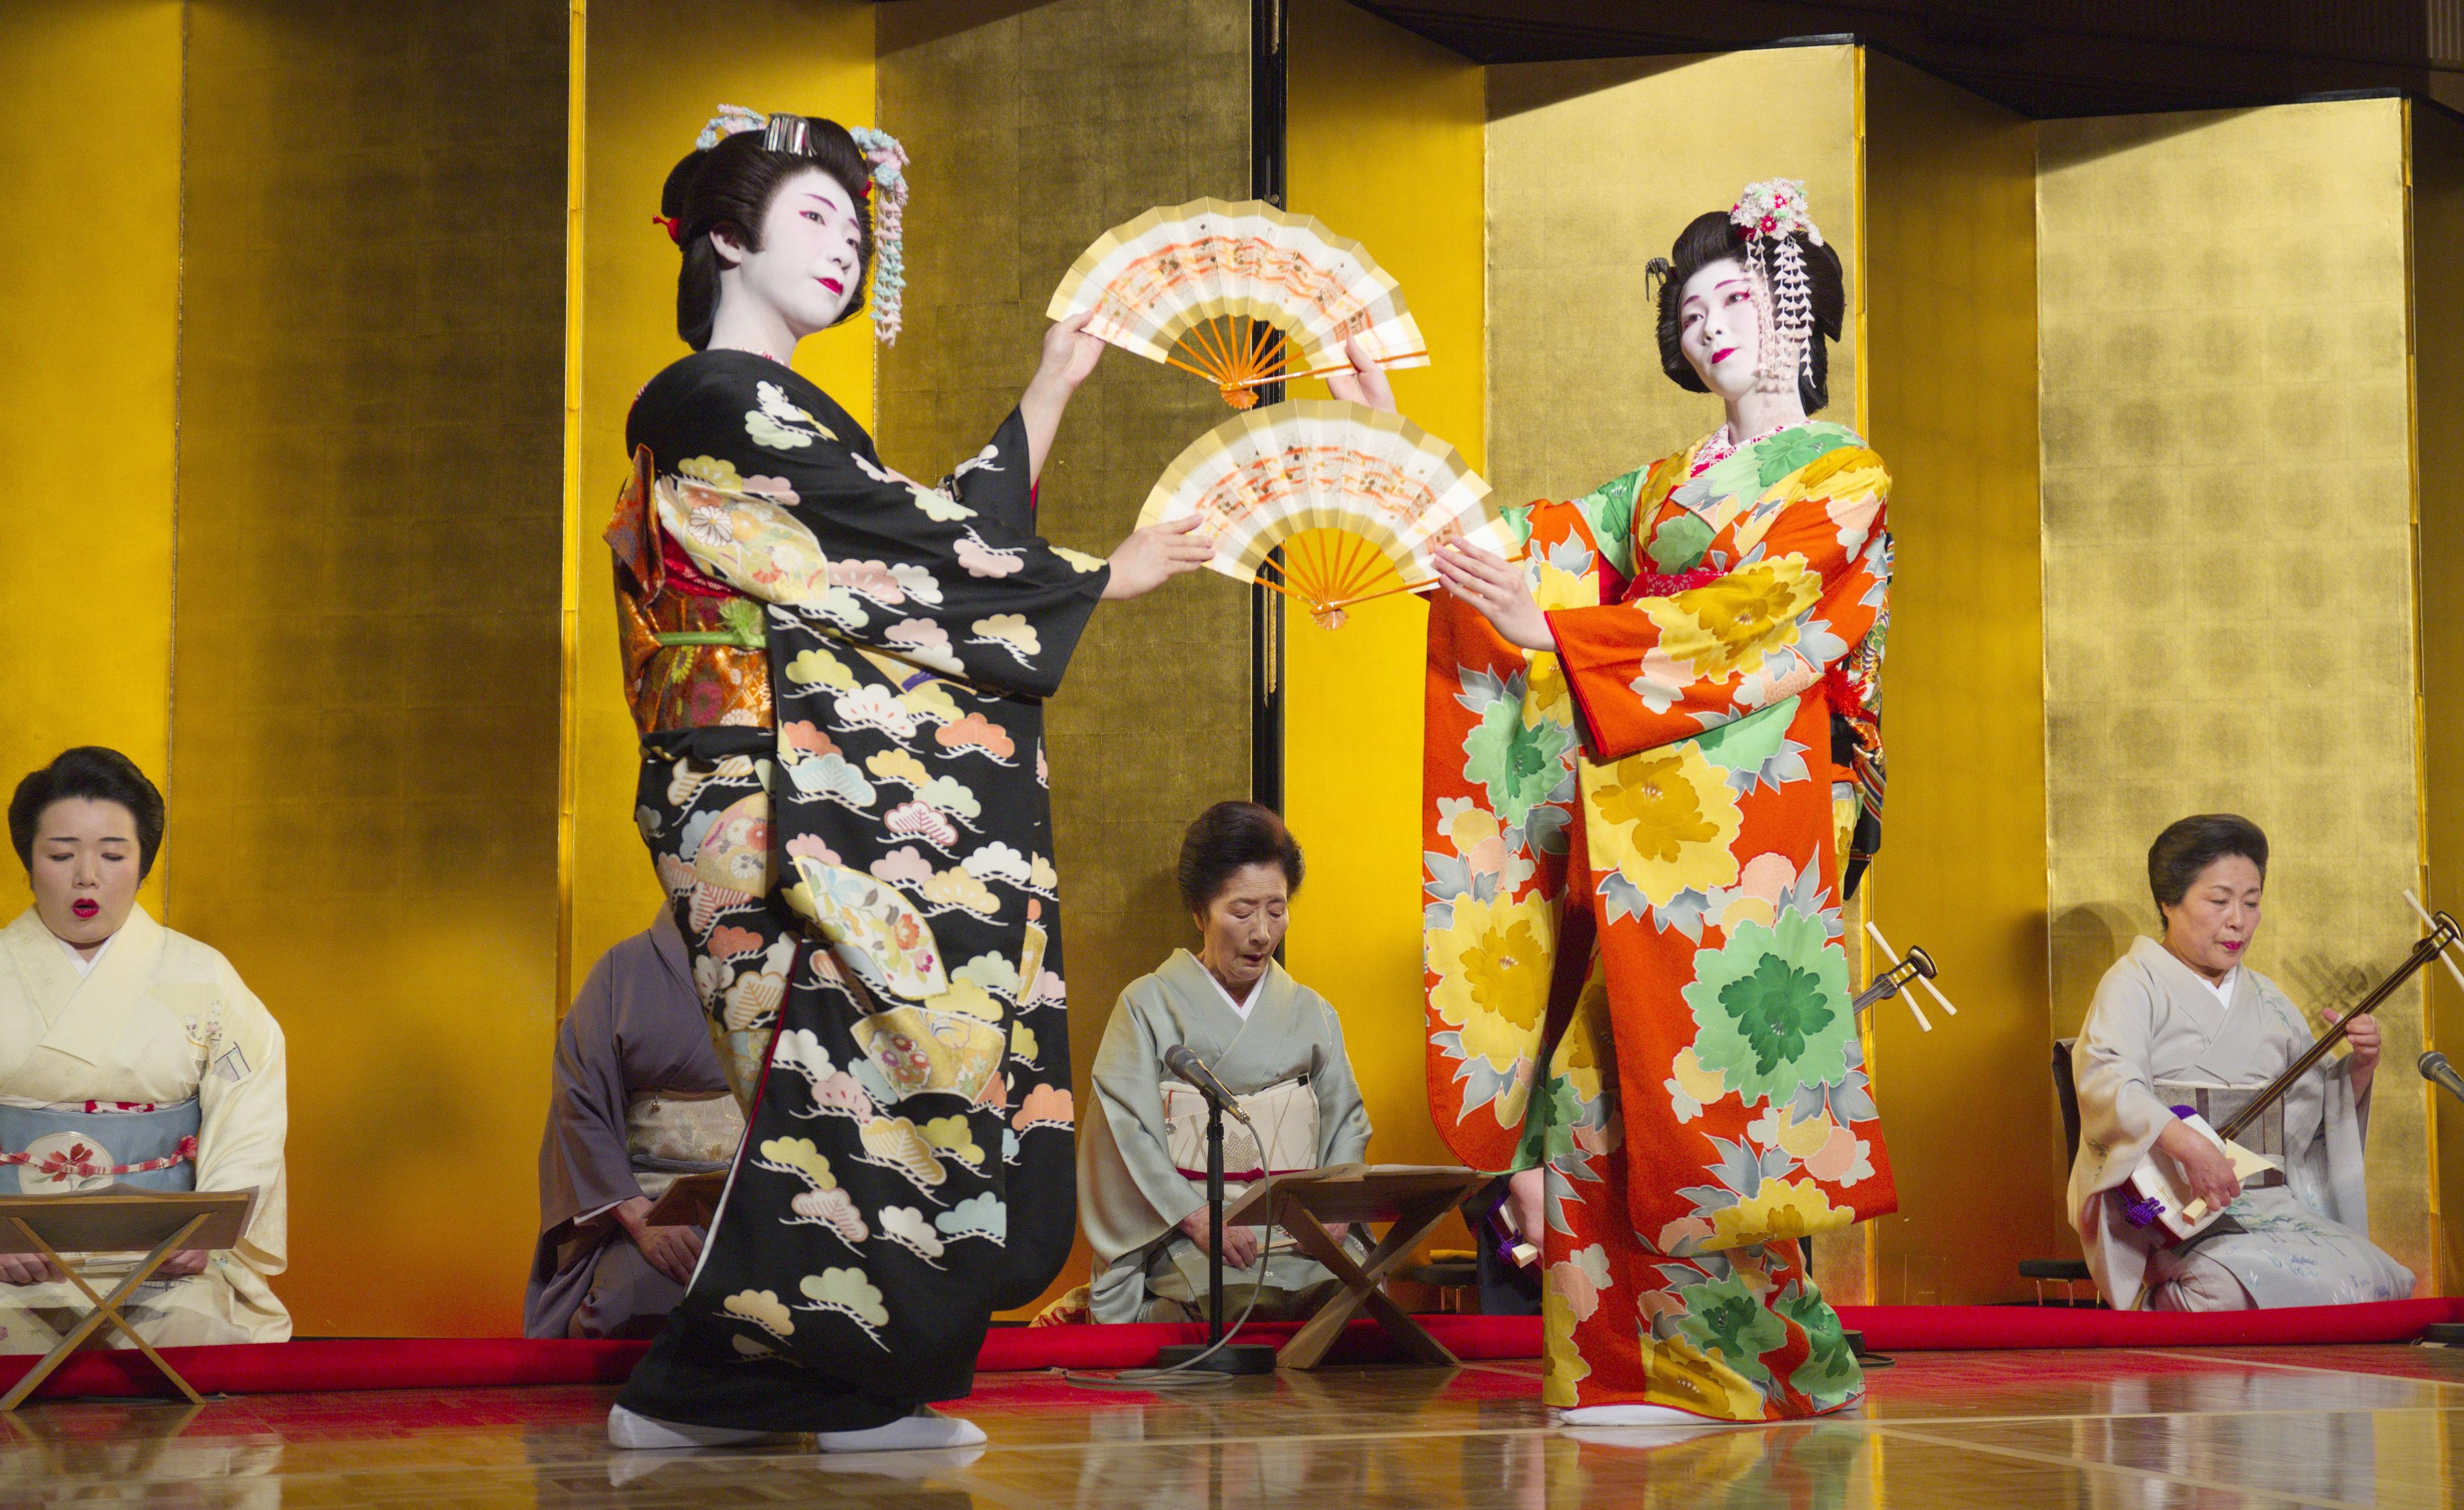 Morioka embraces new young talent to keep geisha tradition alive - The ...